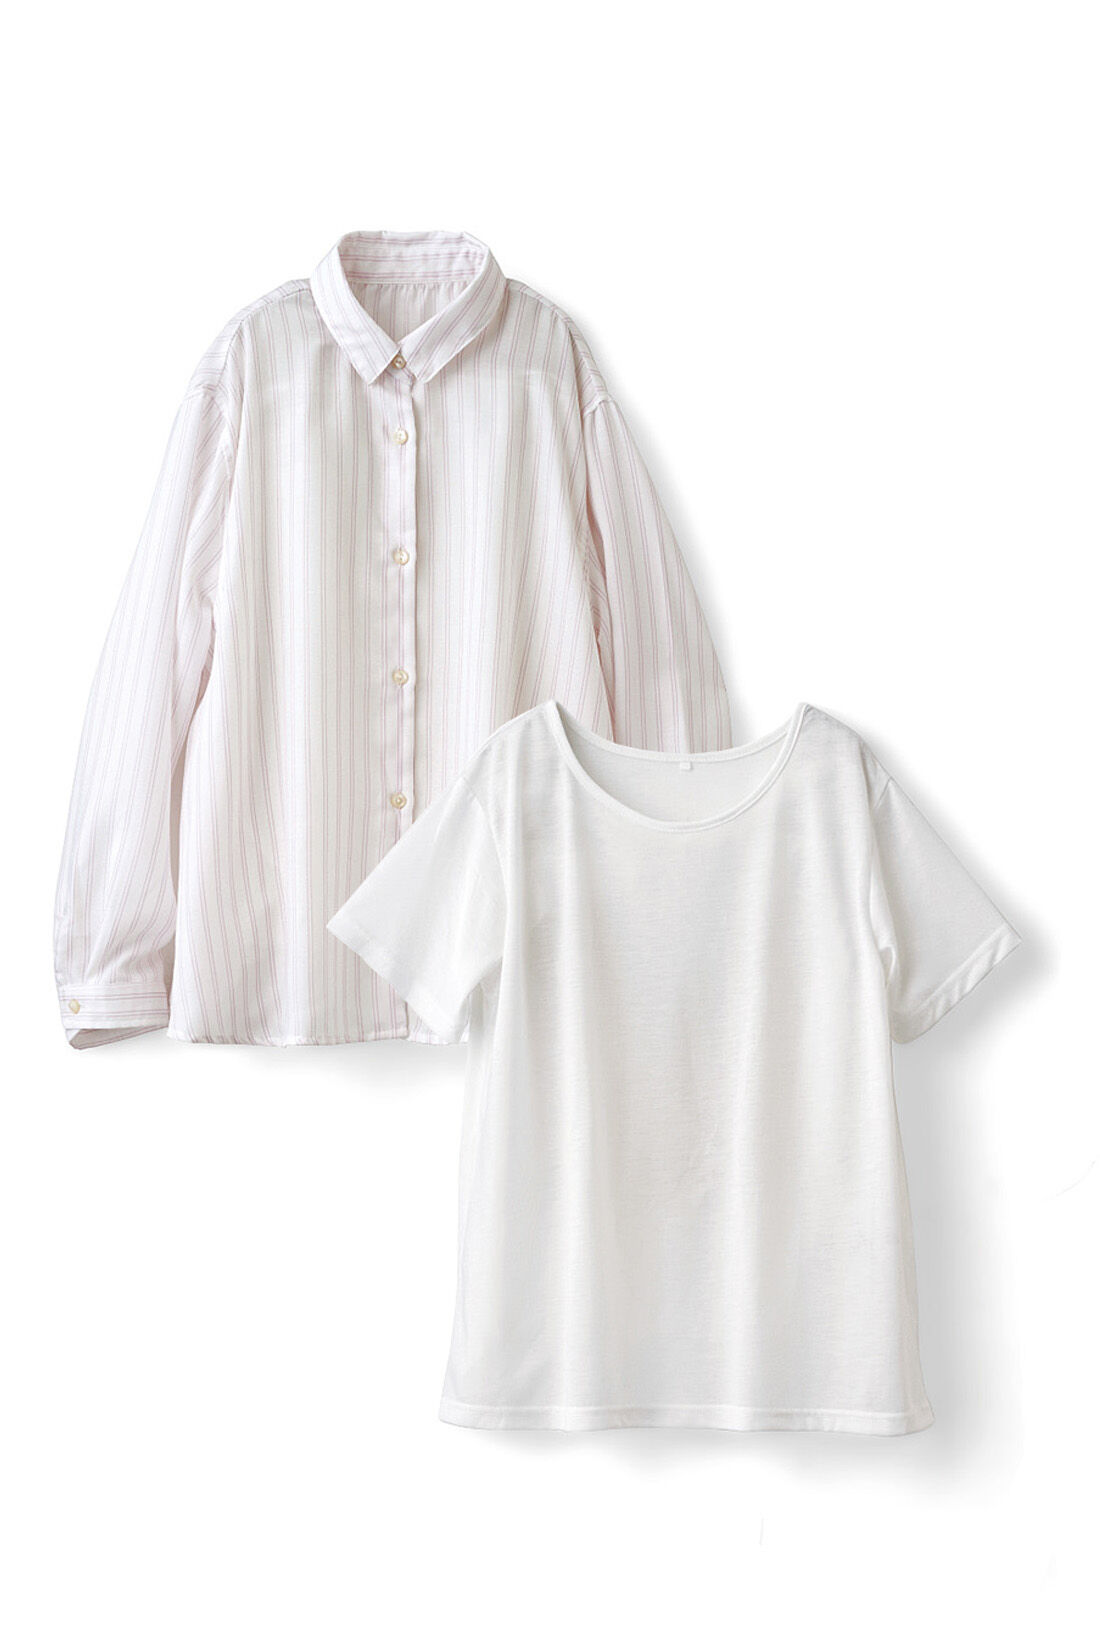 DRECO by IEDIT|DRECOバイヤーズセレクト ストライプシャツとTシャツのセット〈ホワイト〉|Tシャツインナーとストライプシャツの二枚セット。